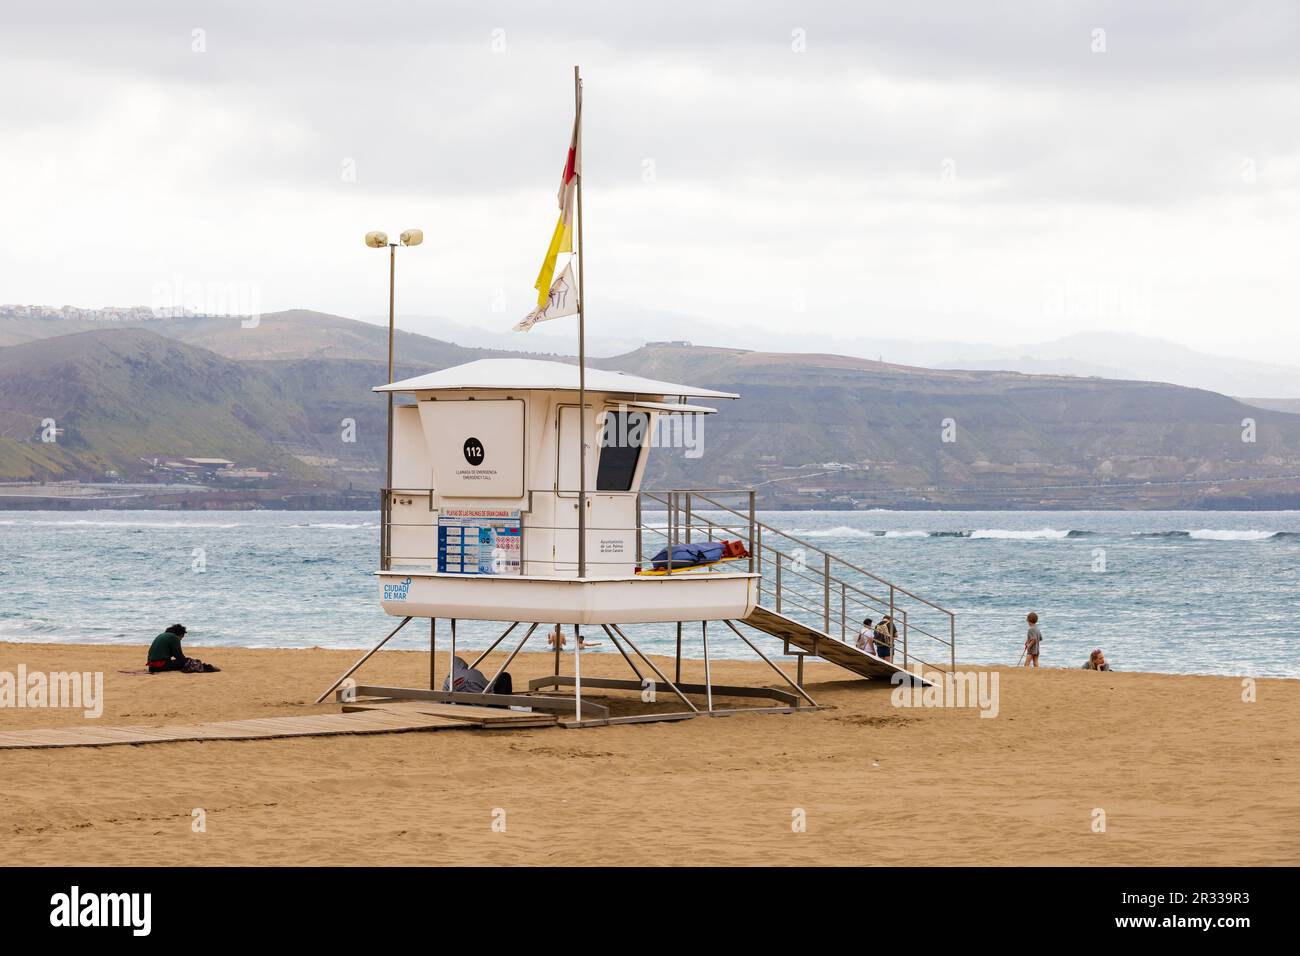 Cabane de plage de la protection de la vie, plage Playa de la Canteras. Las Palmas, Grande Canarie, Espagne Banque D'Images